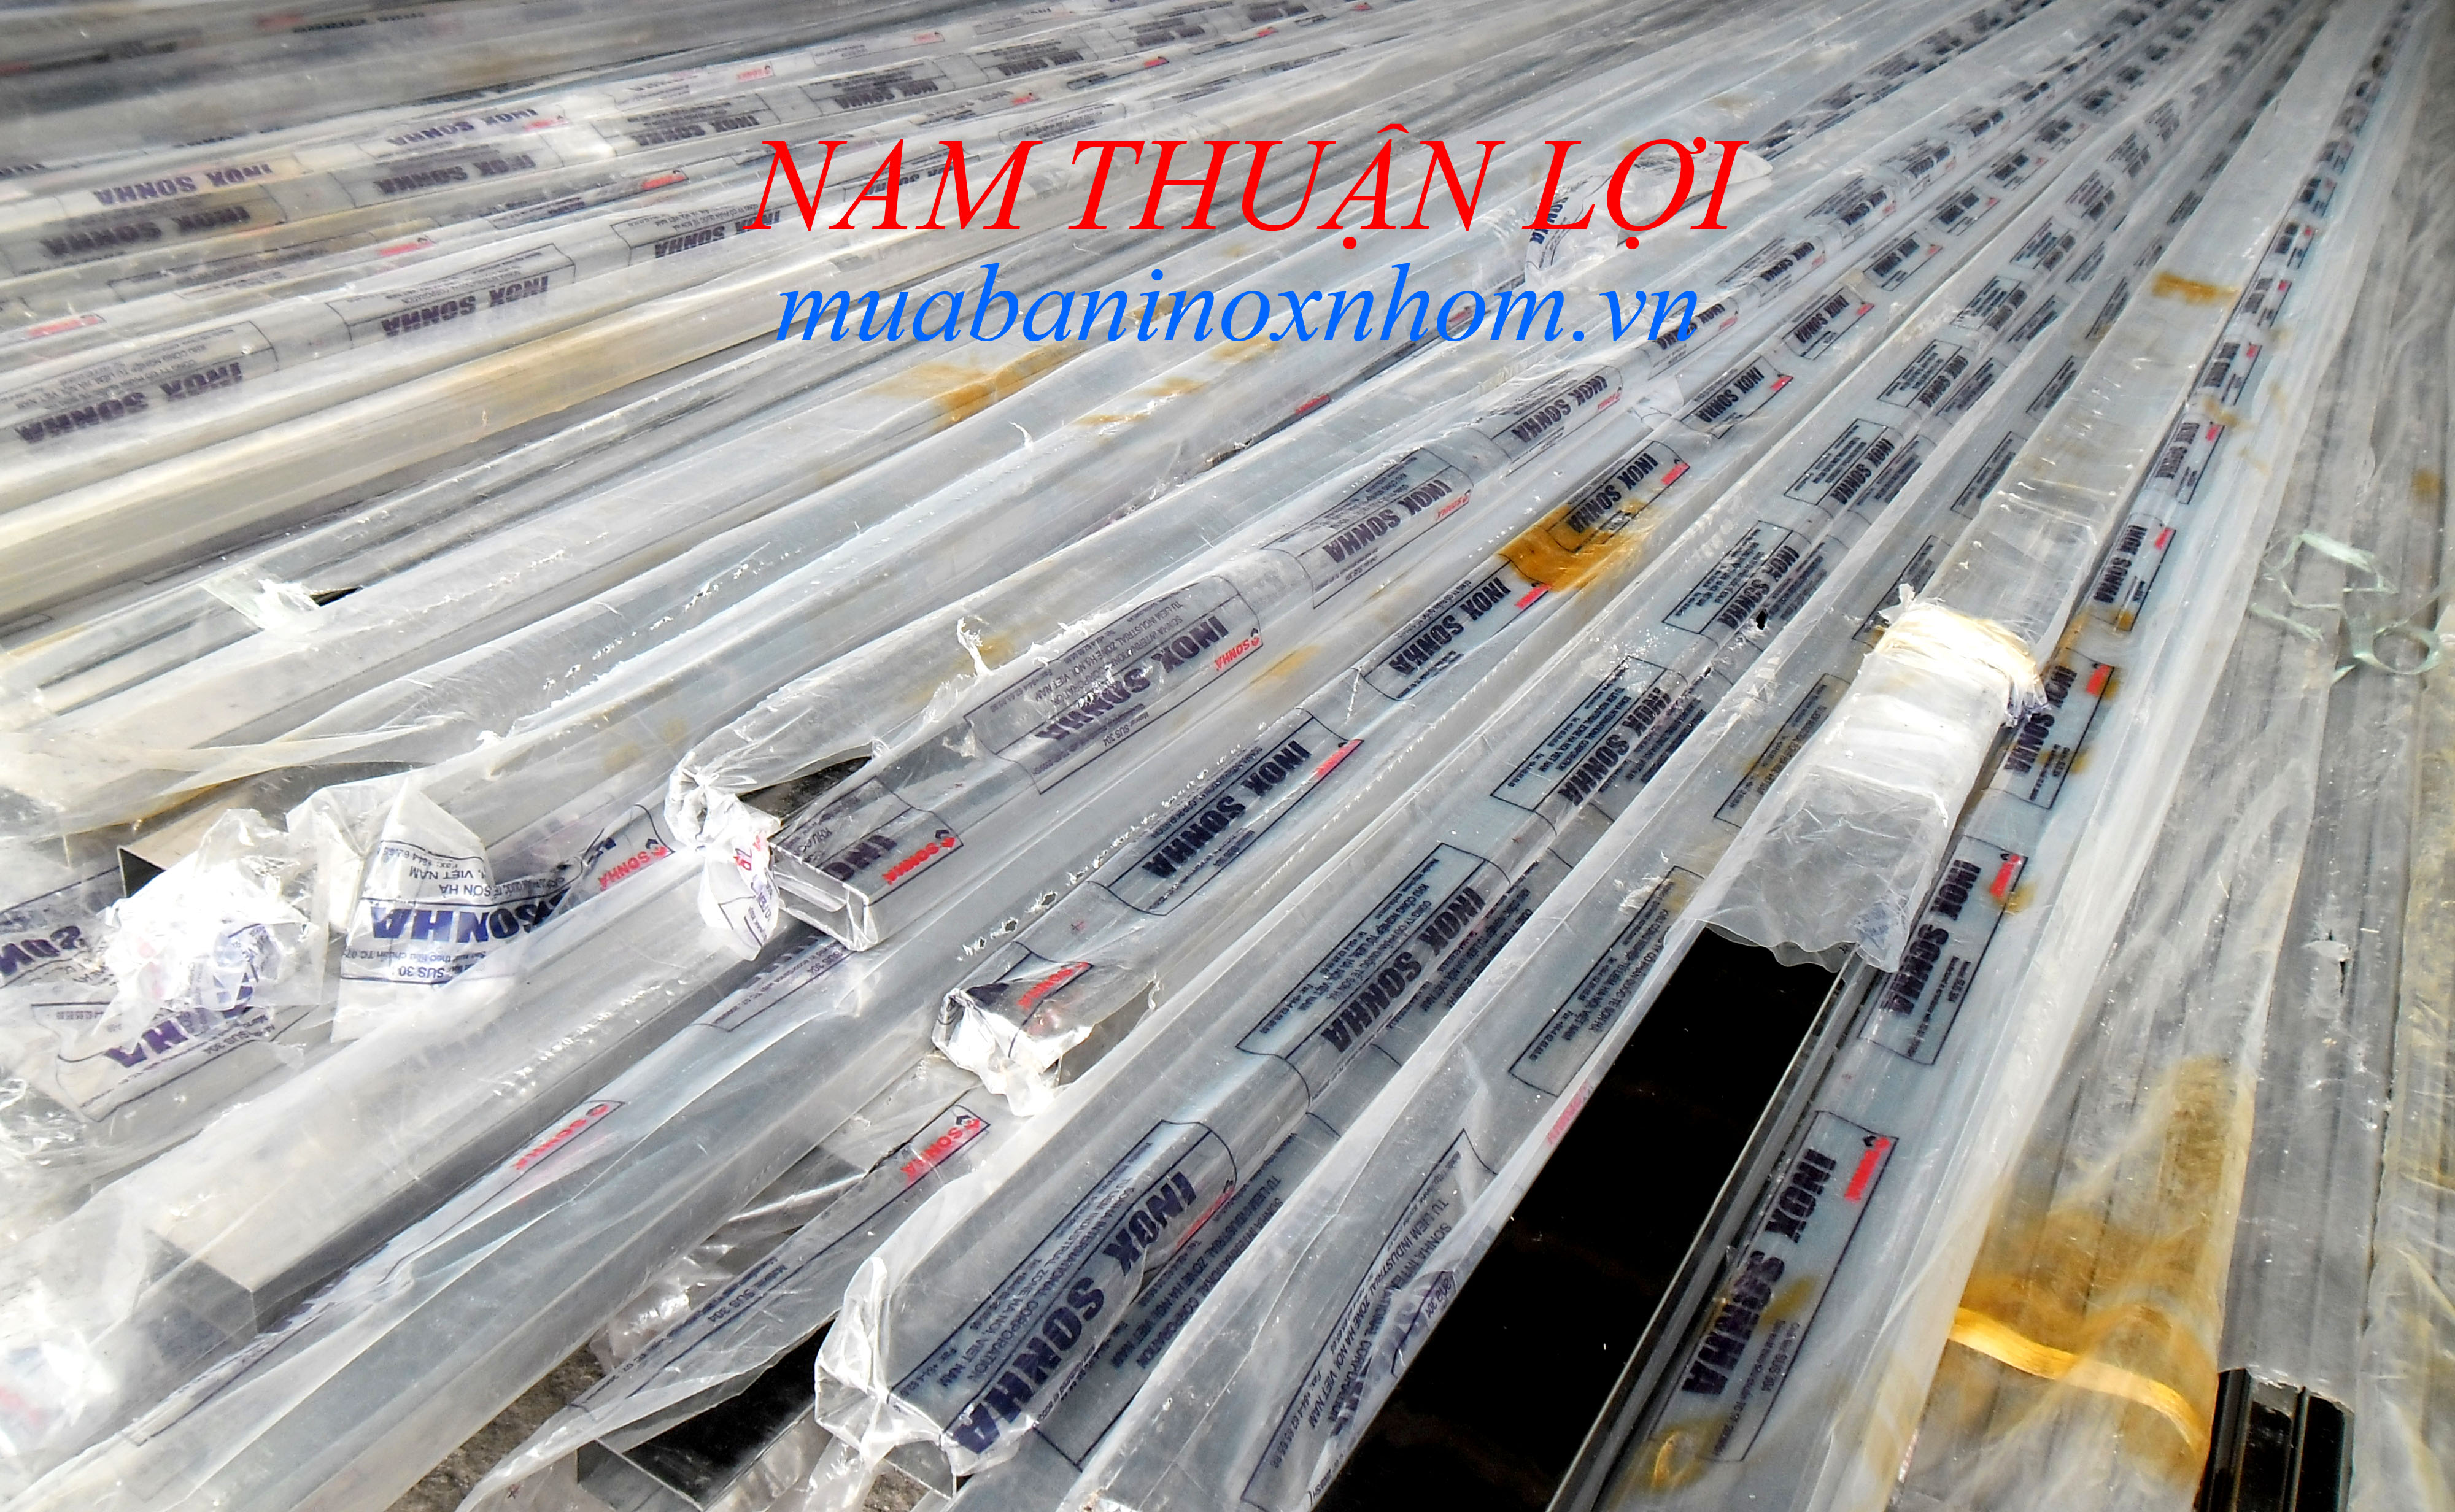 vuong inox-304-13x26 mm